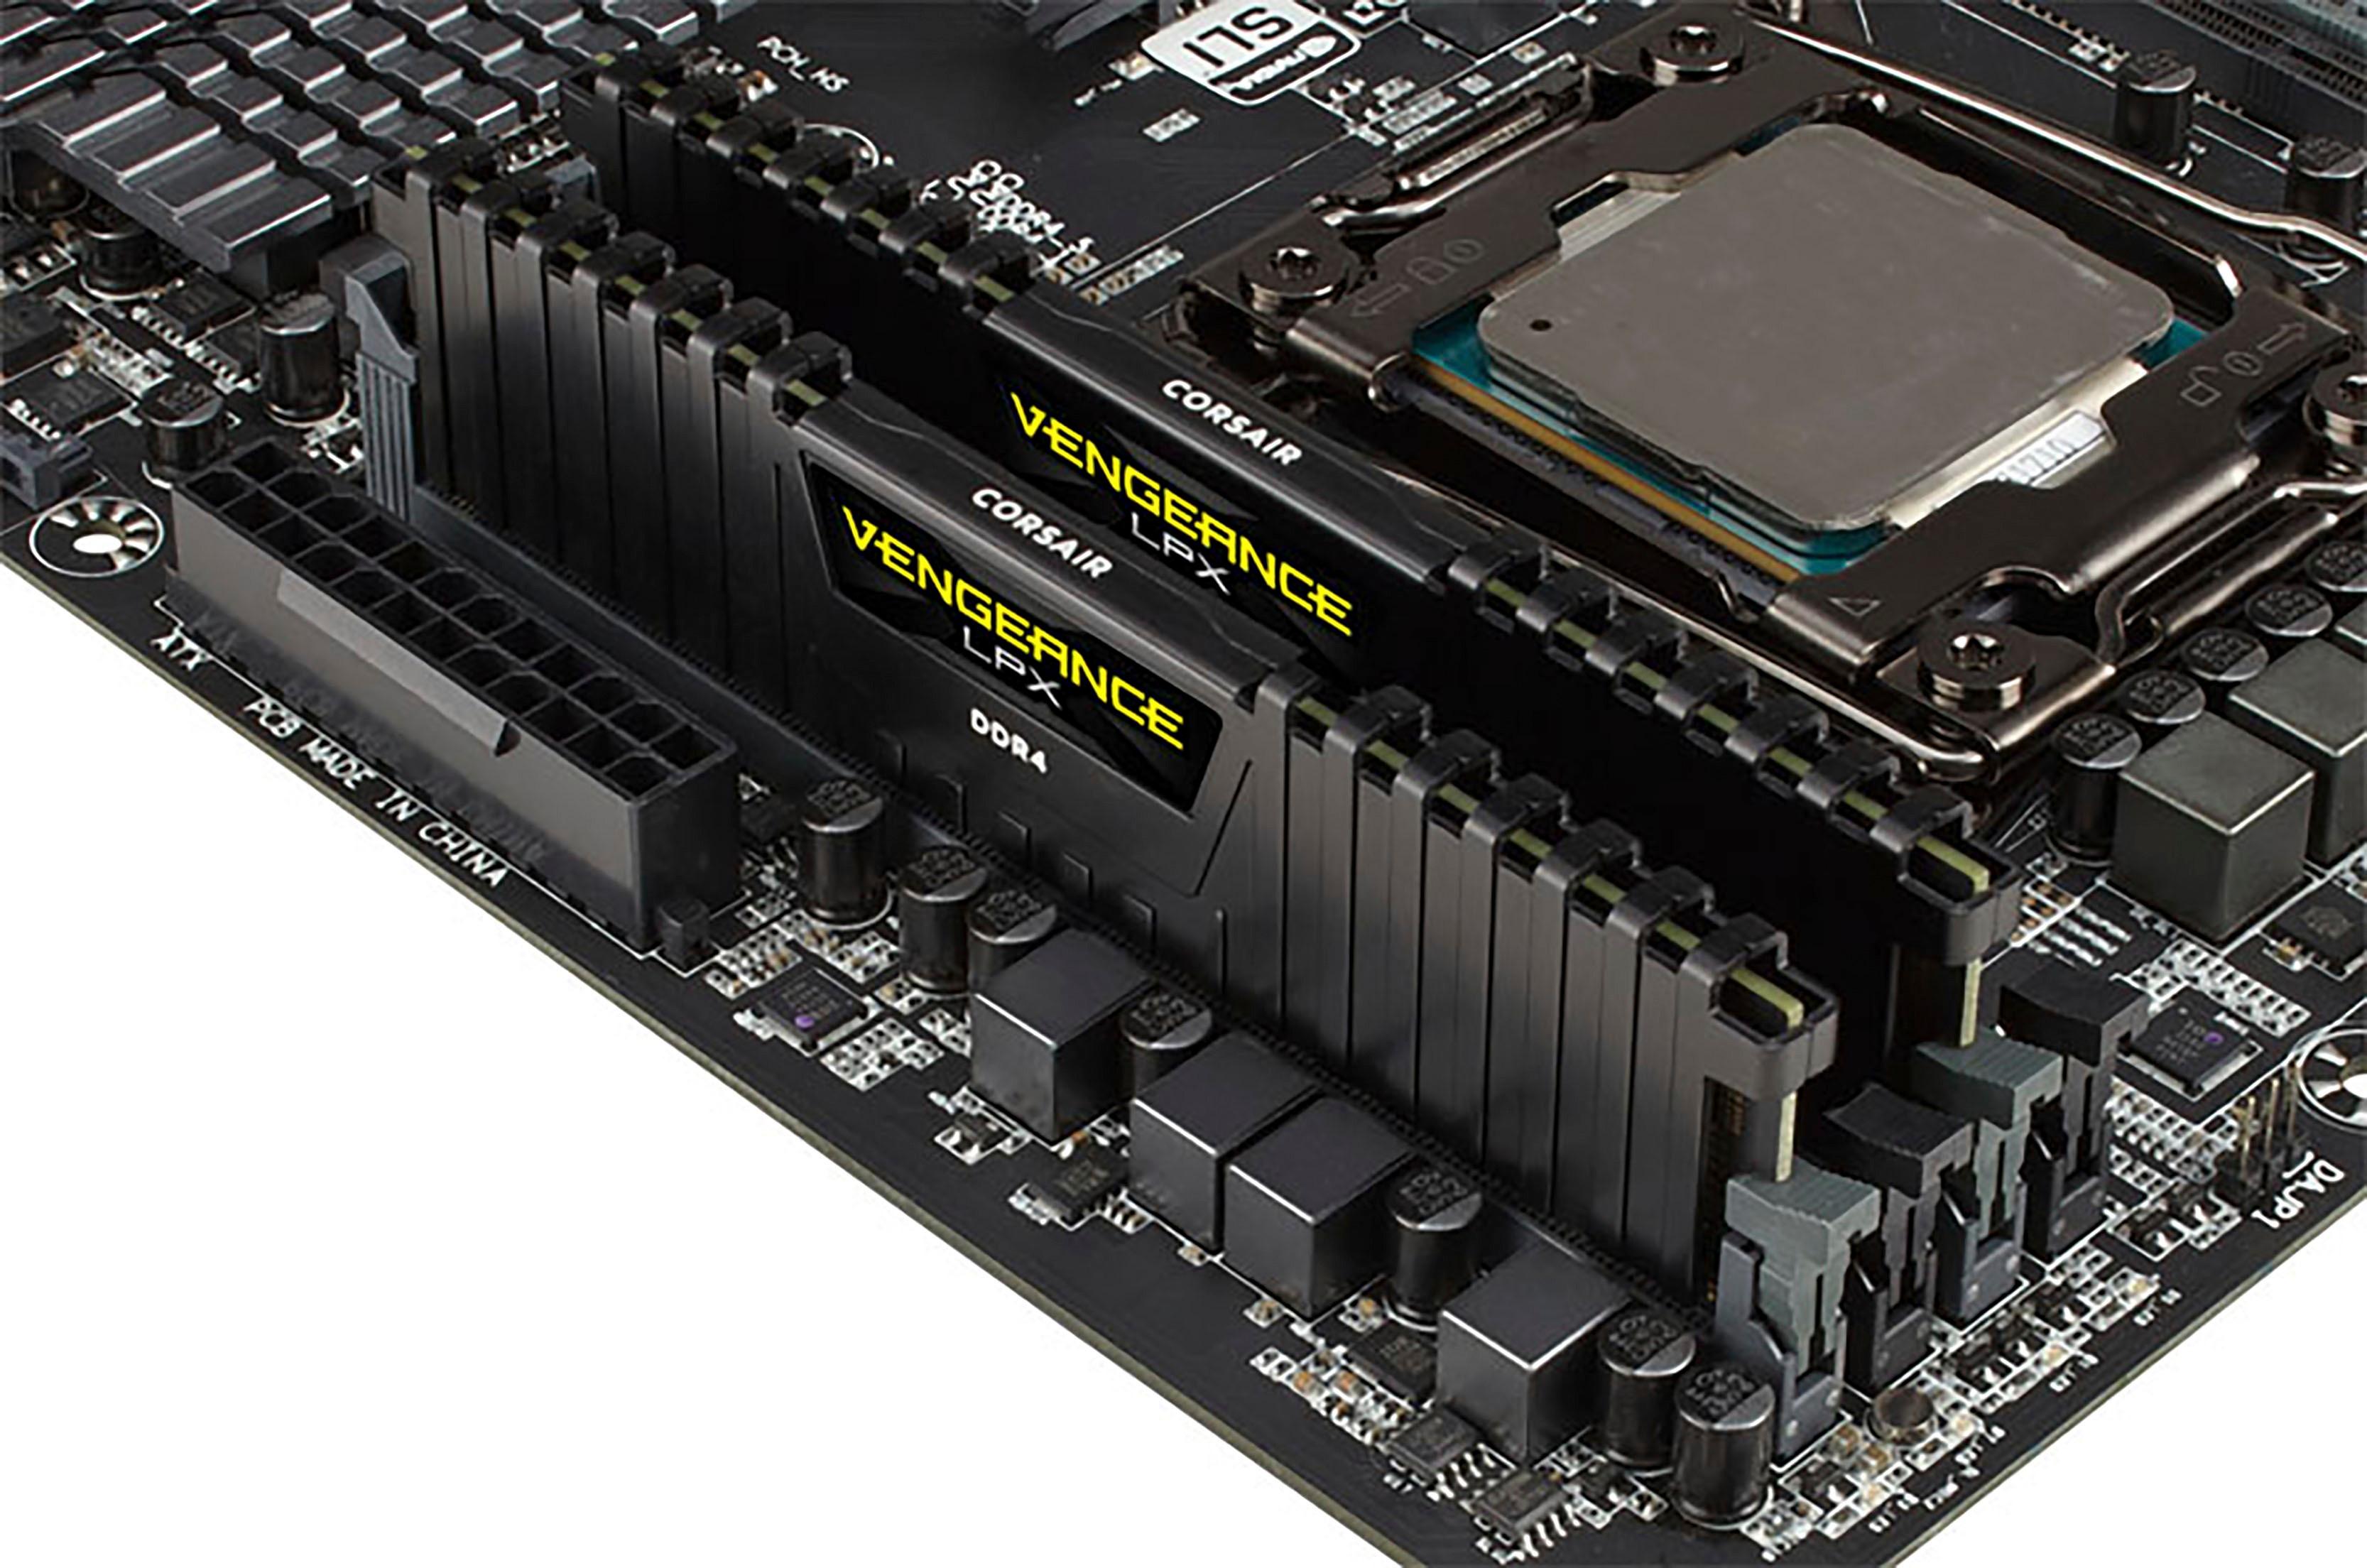 Corsair Vengeance LPX je 2modulová sada 288-pinových operačních pamětí typu DDR4 DIMM s frekvencí až 2 666 MHz a s kapacitou 2x 8 GB.